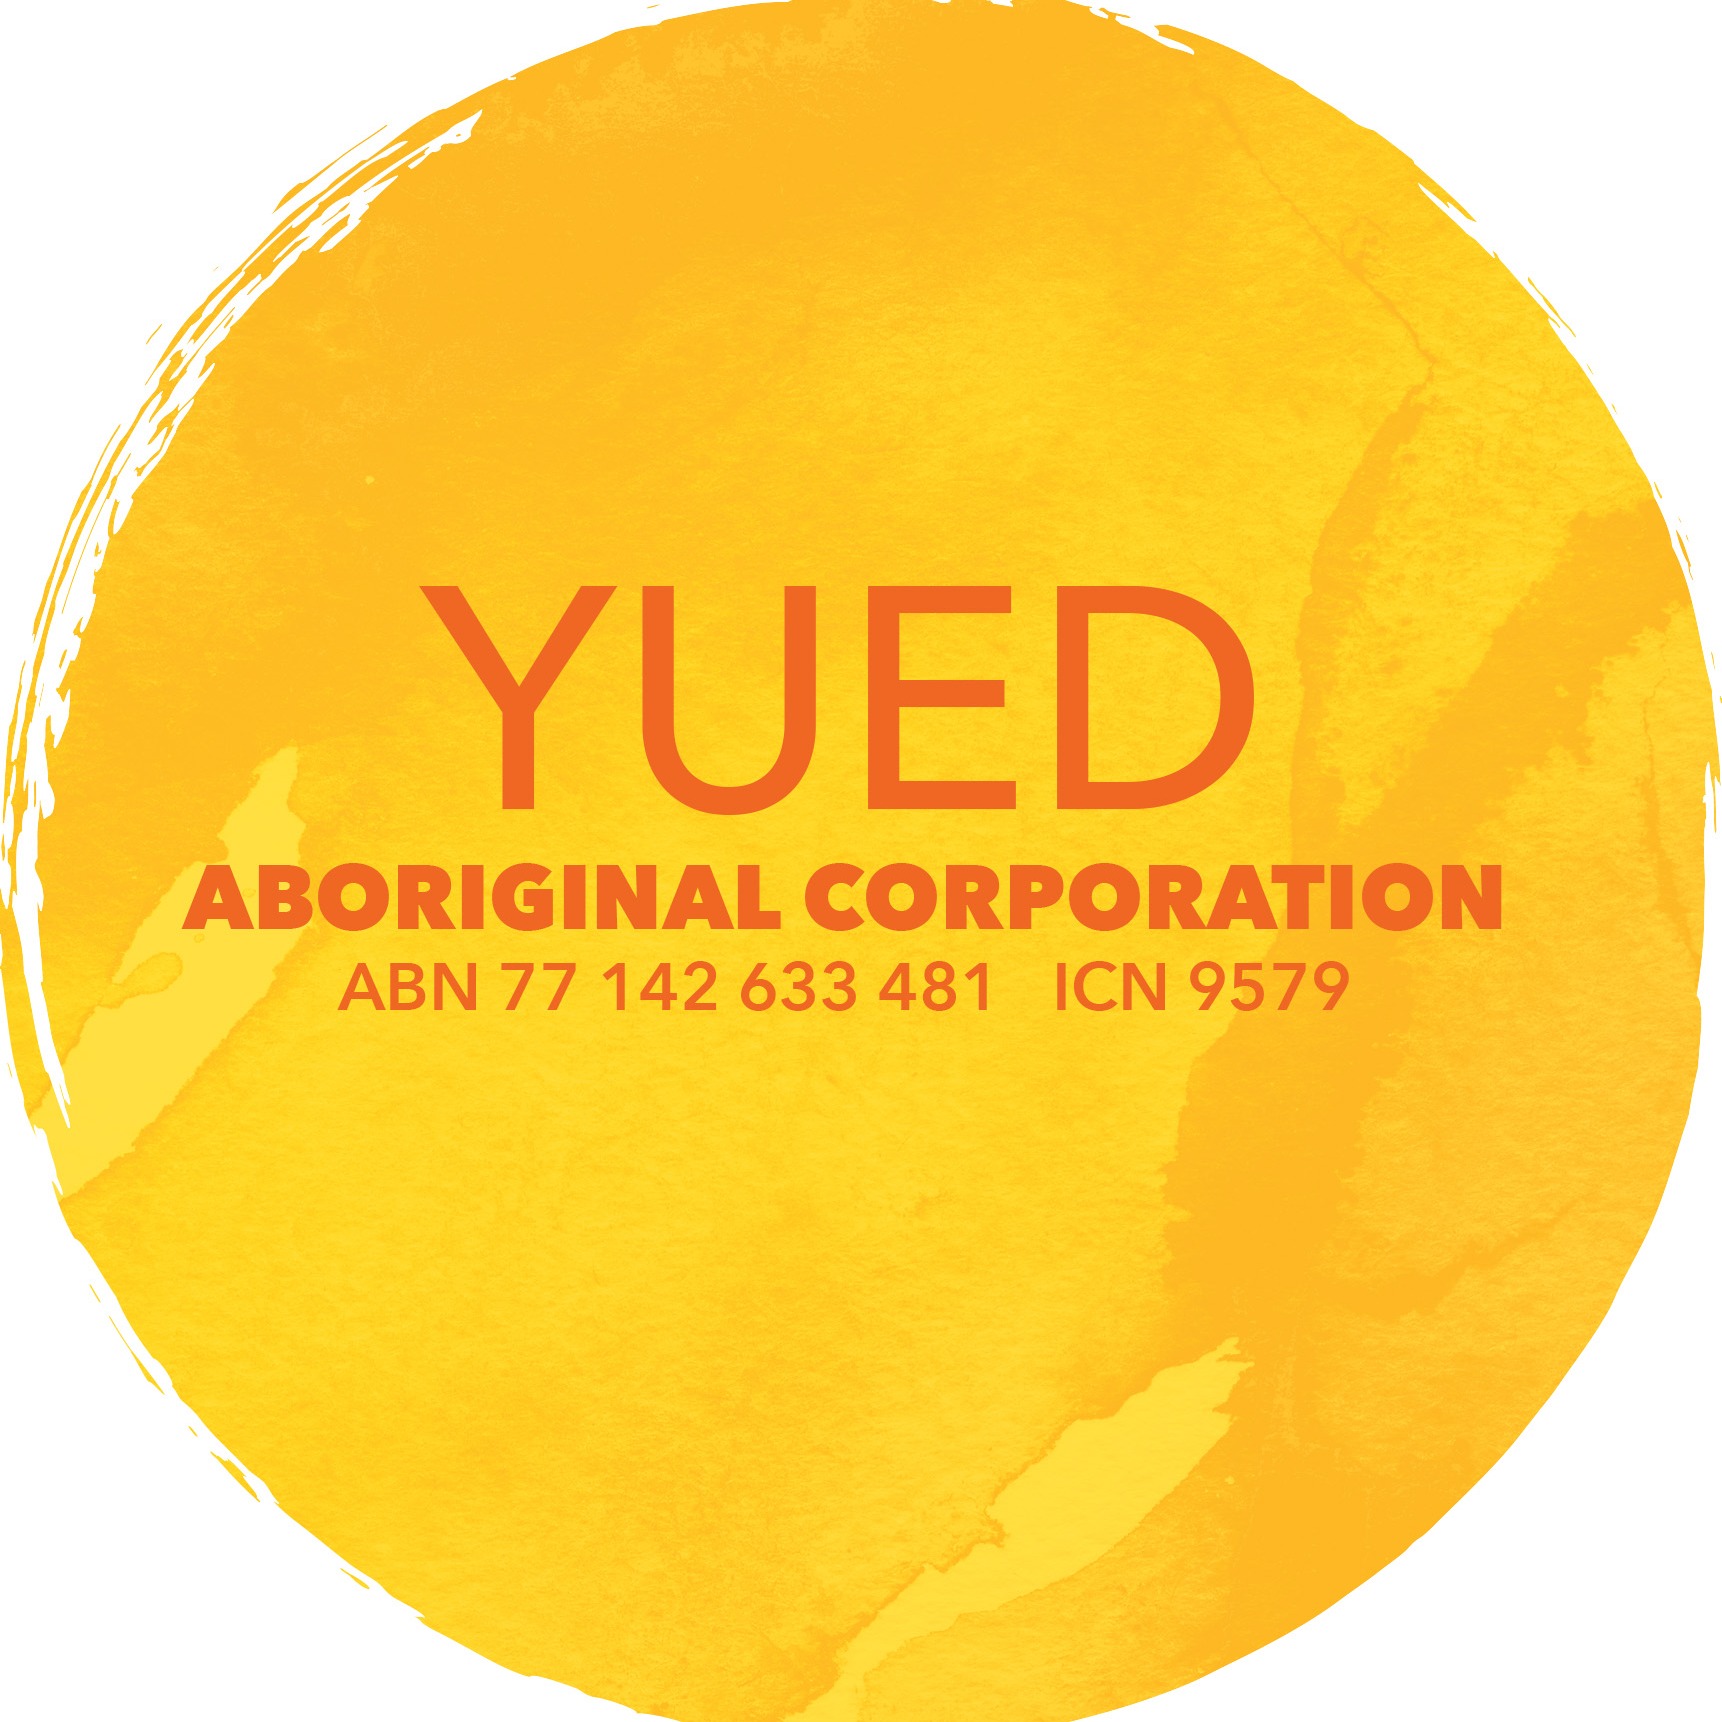 YUED Aboriginal Corporation